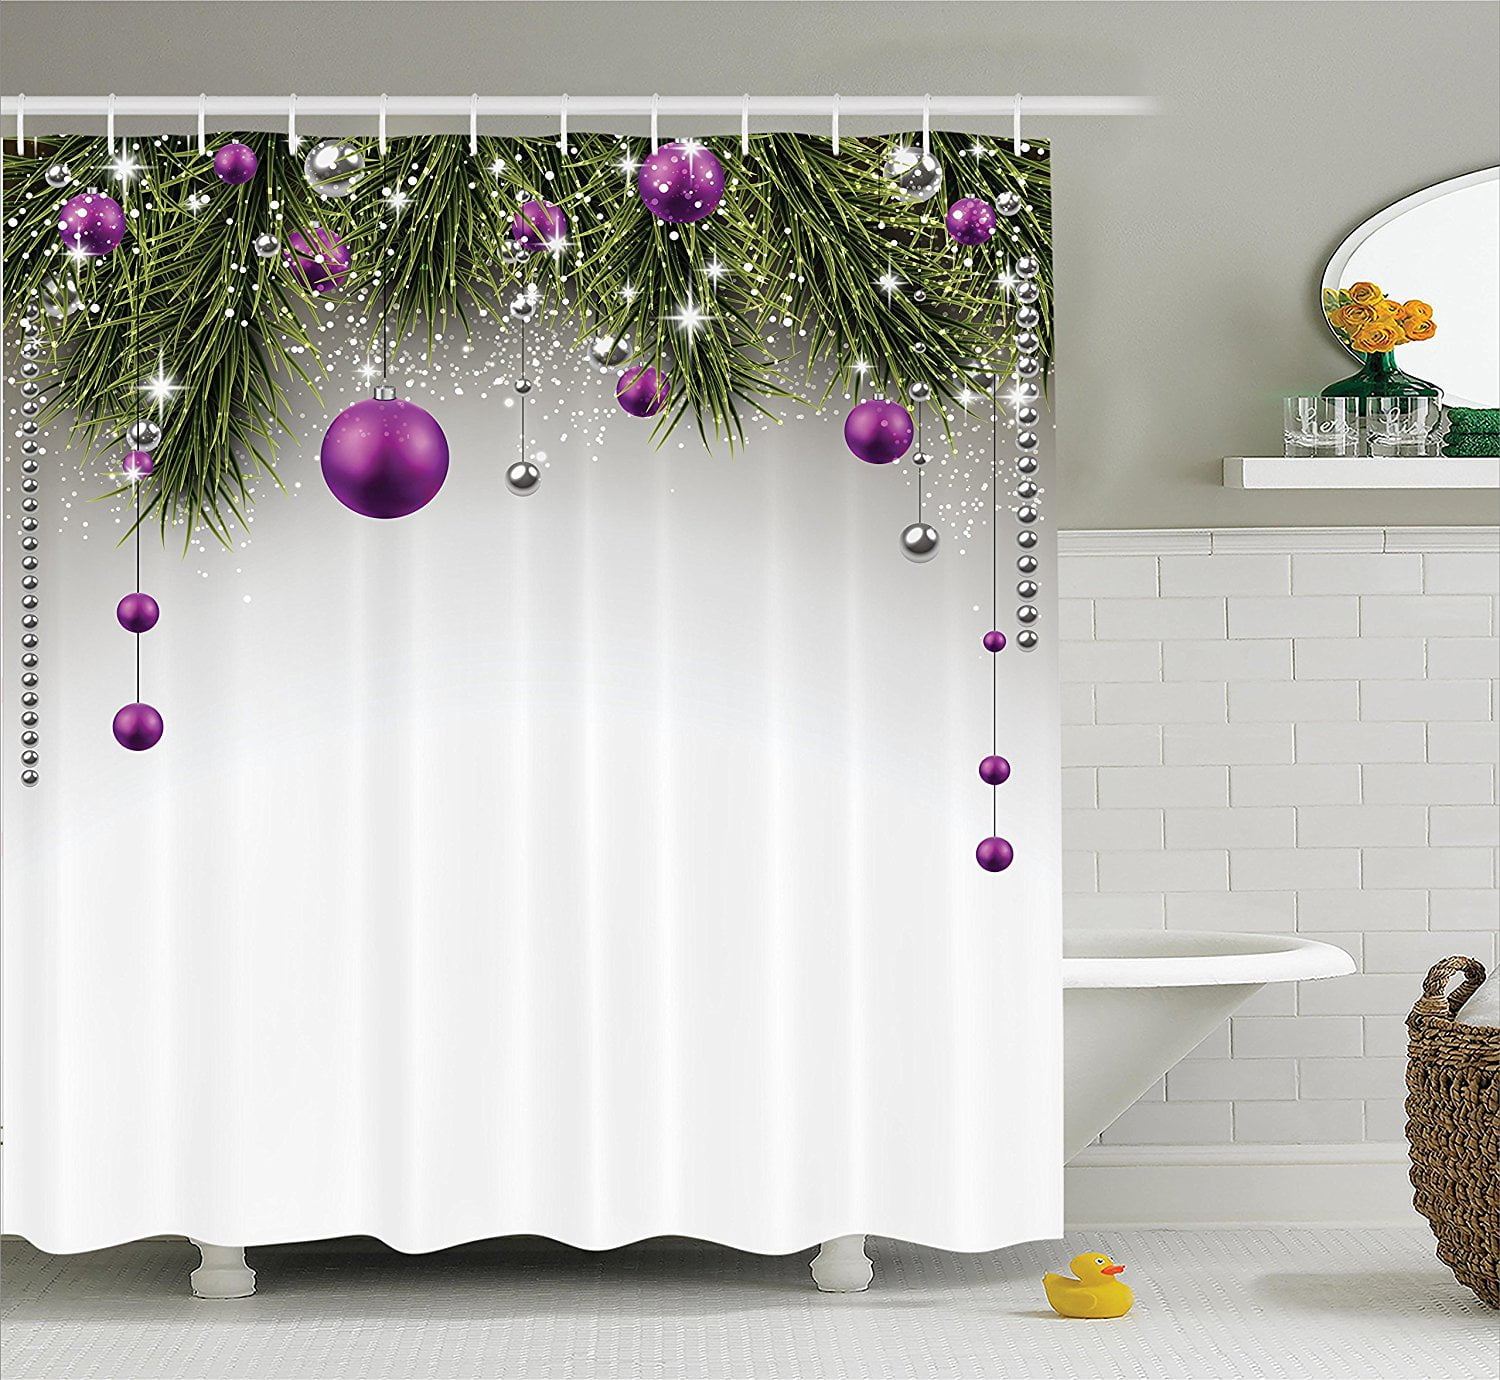 Golden Christmas balls and tinsel Shower Curtain Bathroom Fabric & 12hooks new 